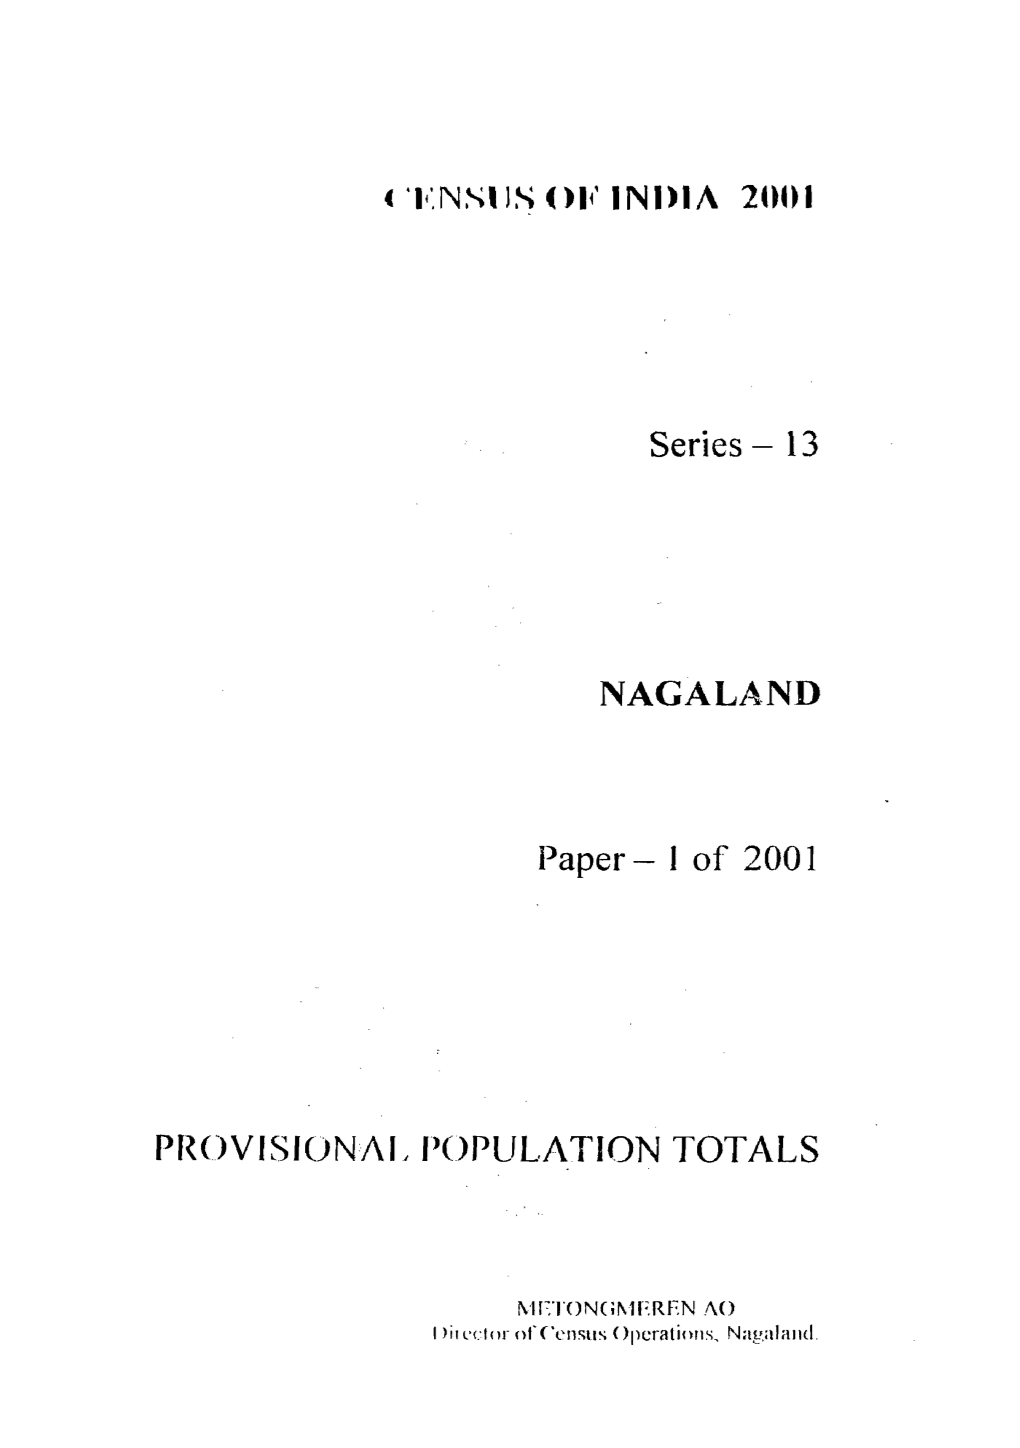 Provisional Population Totals, Series-13, Nagaland